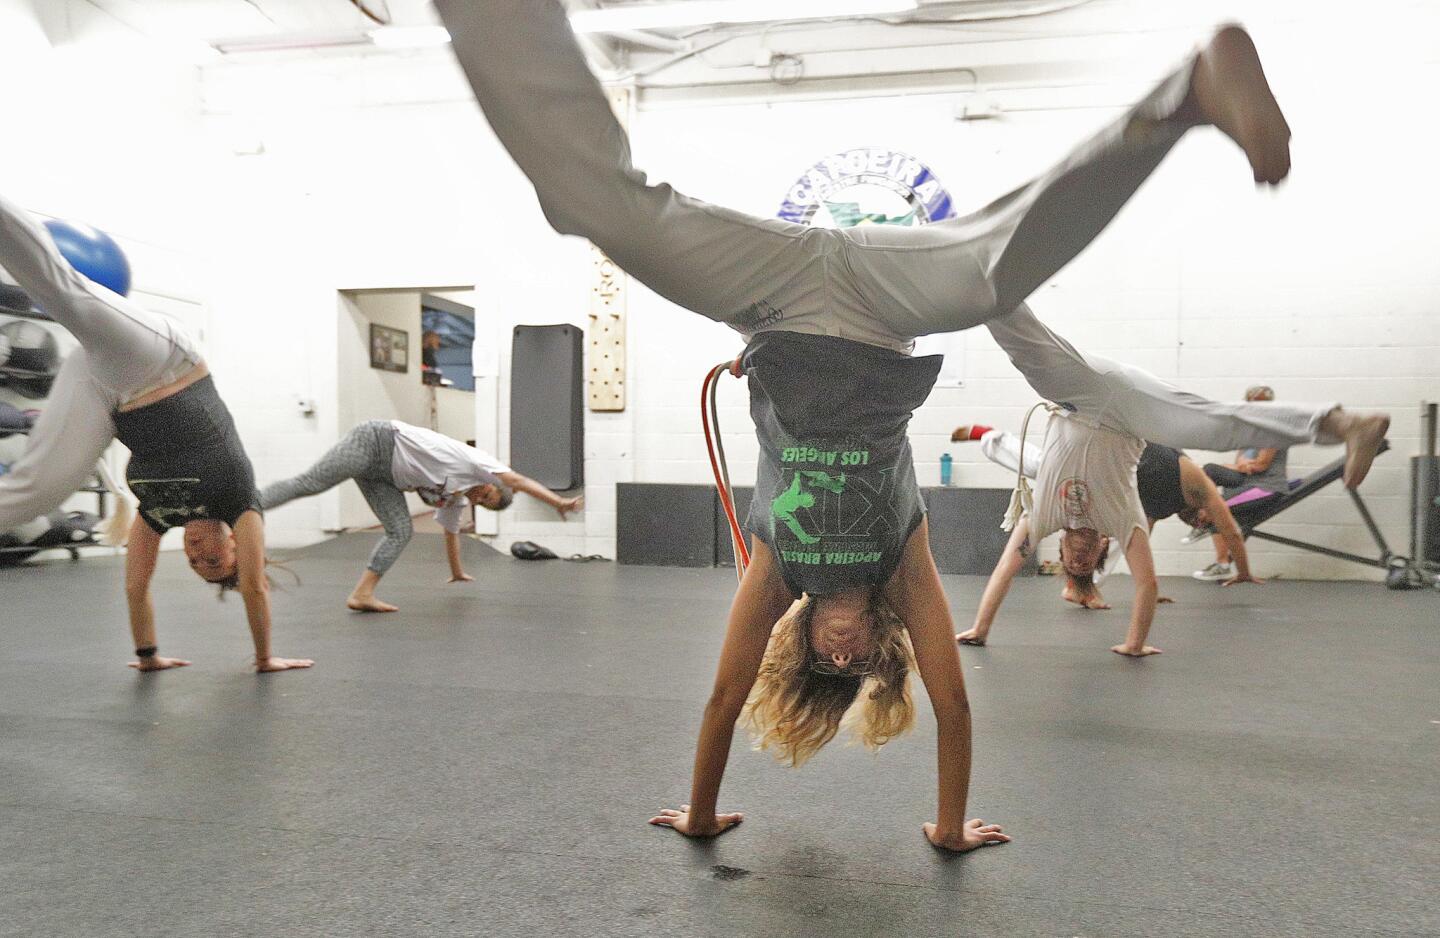 Photo Gallery: Capoeira class taught at Legacy Brazilian Jiu-Jitsu and Mixed Martial Arts in Burbank